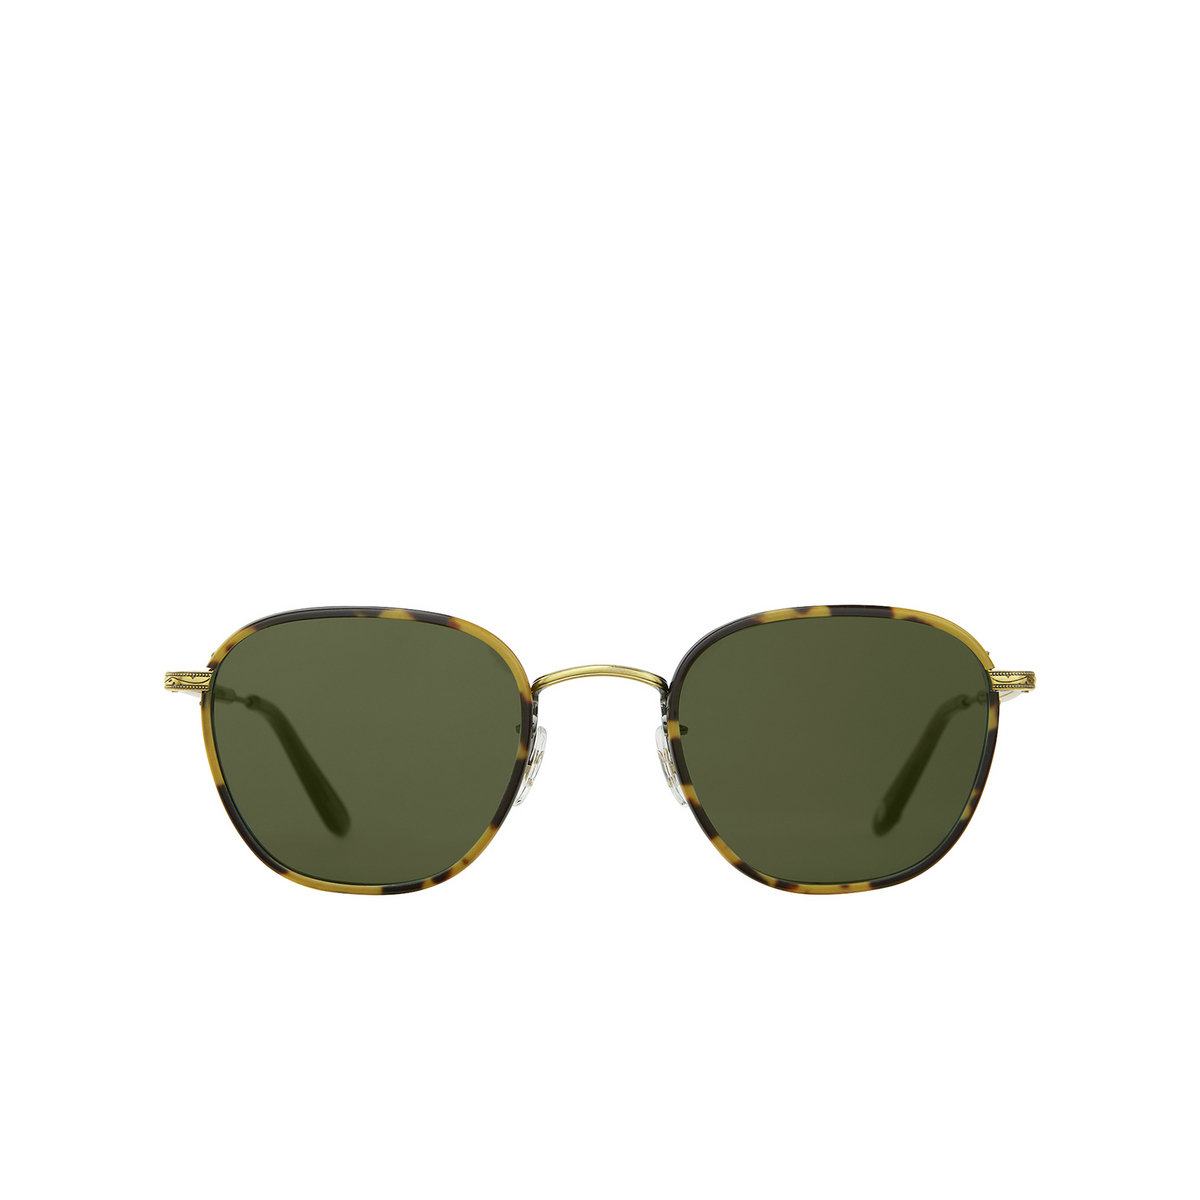 Garrett Leight® Square Sunglasses: Grant Sun color Tokyo Tortoise - Antique Gold Tt-atg-ah/sfpgn - front view.